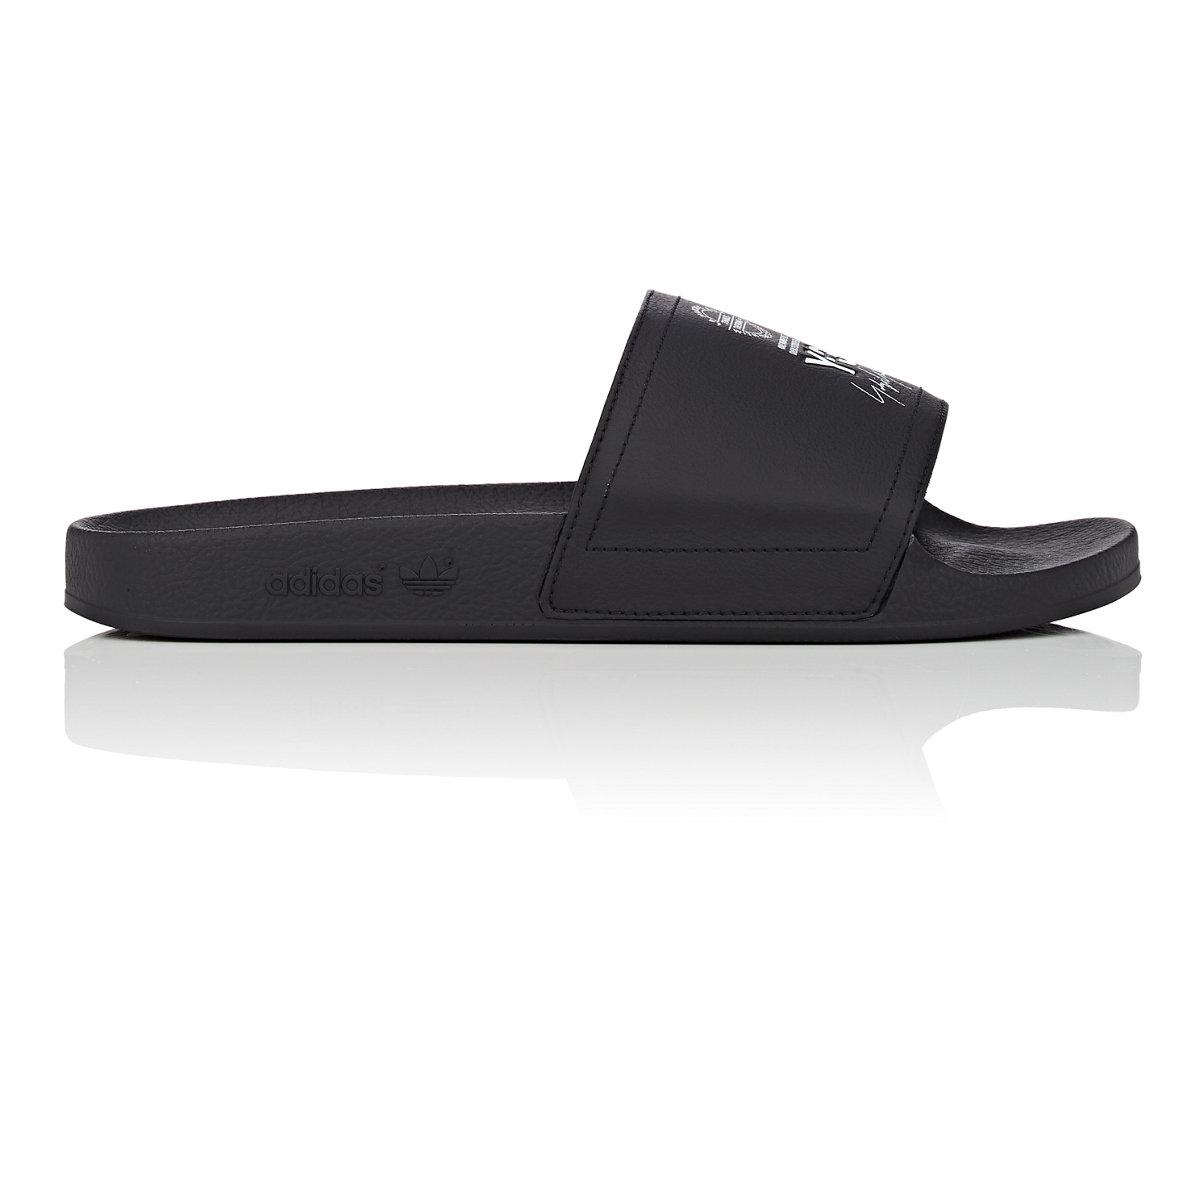 Lyst - Adidas Adilette Leather Slide Sandals in Black for Men